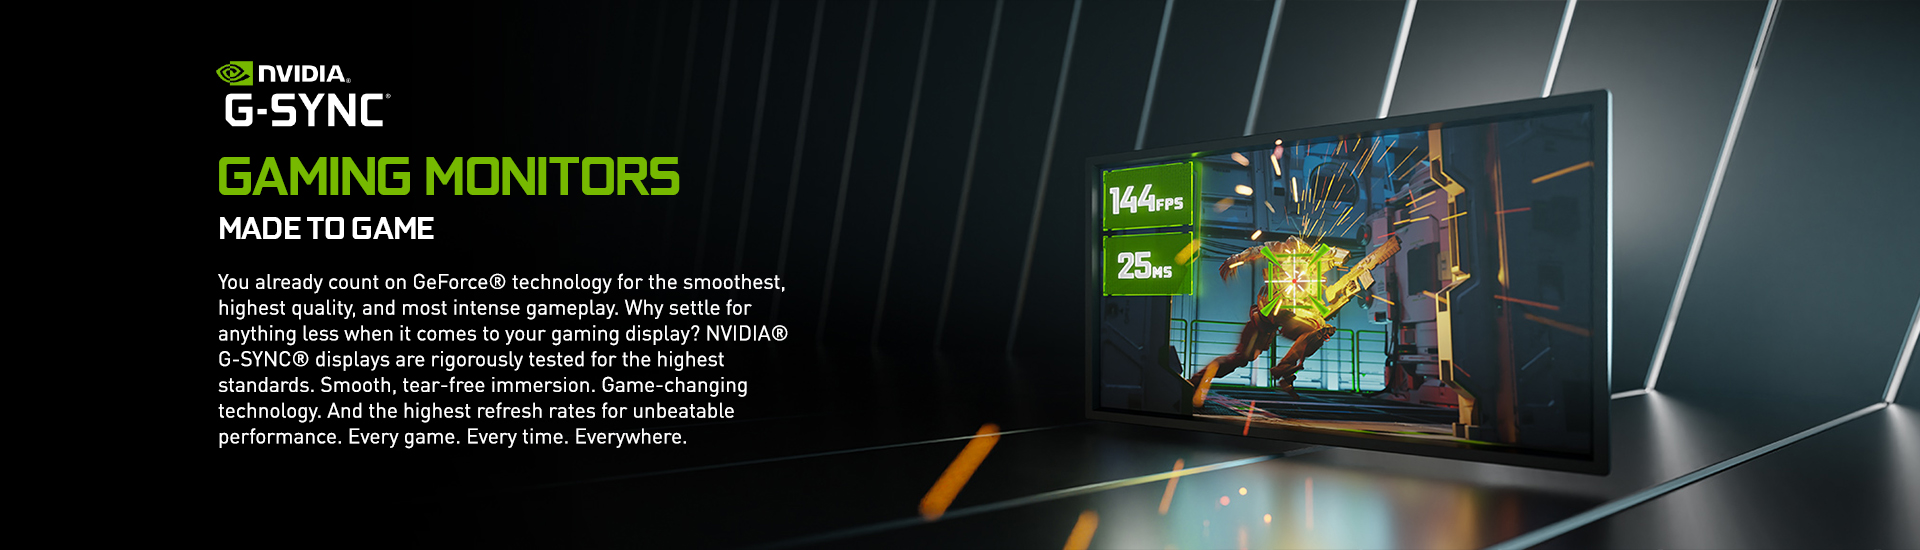 Nvidia Geforcertx30 Gsyncmonitors 03.10.banner2